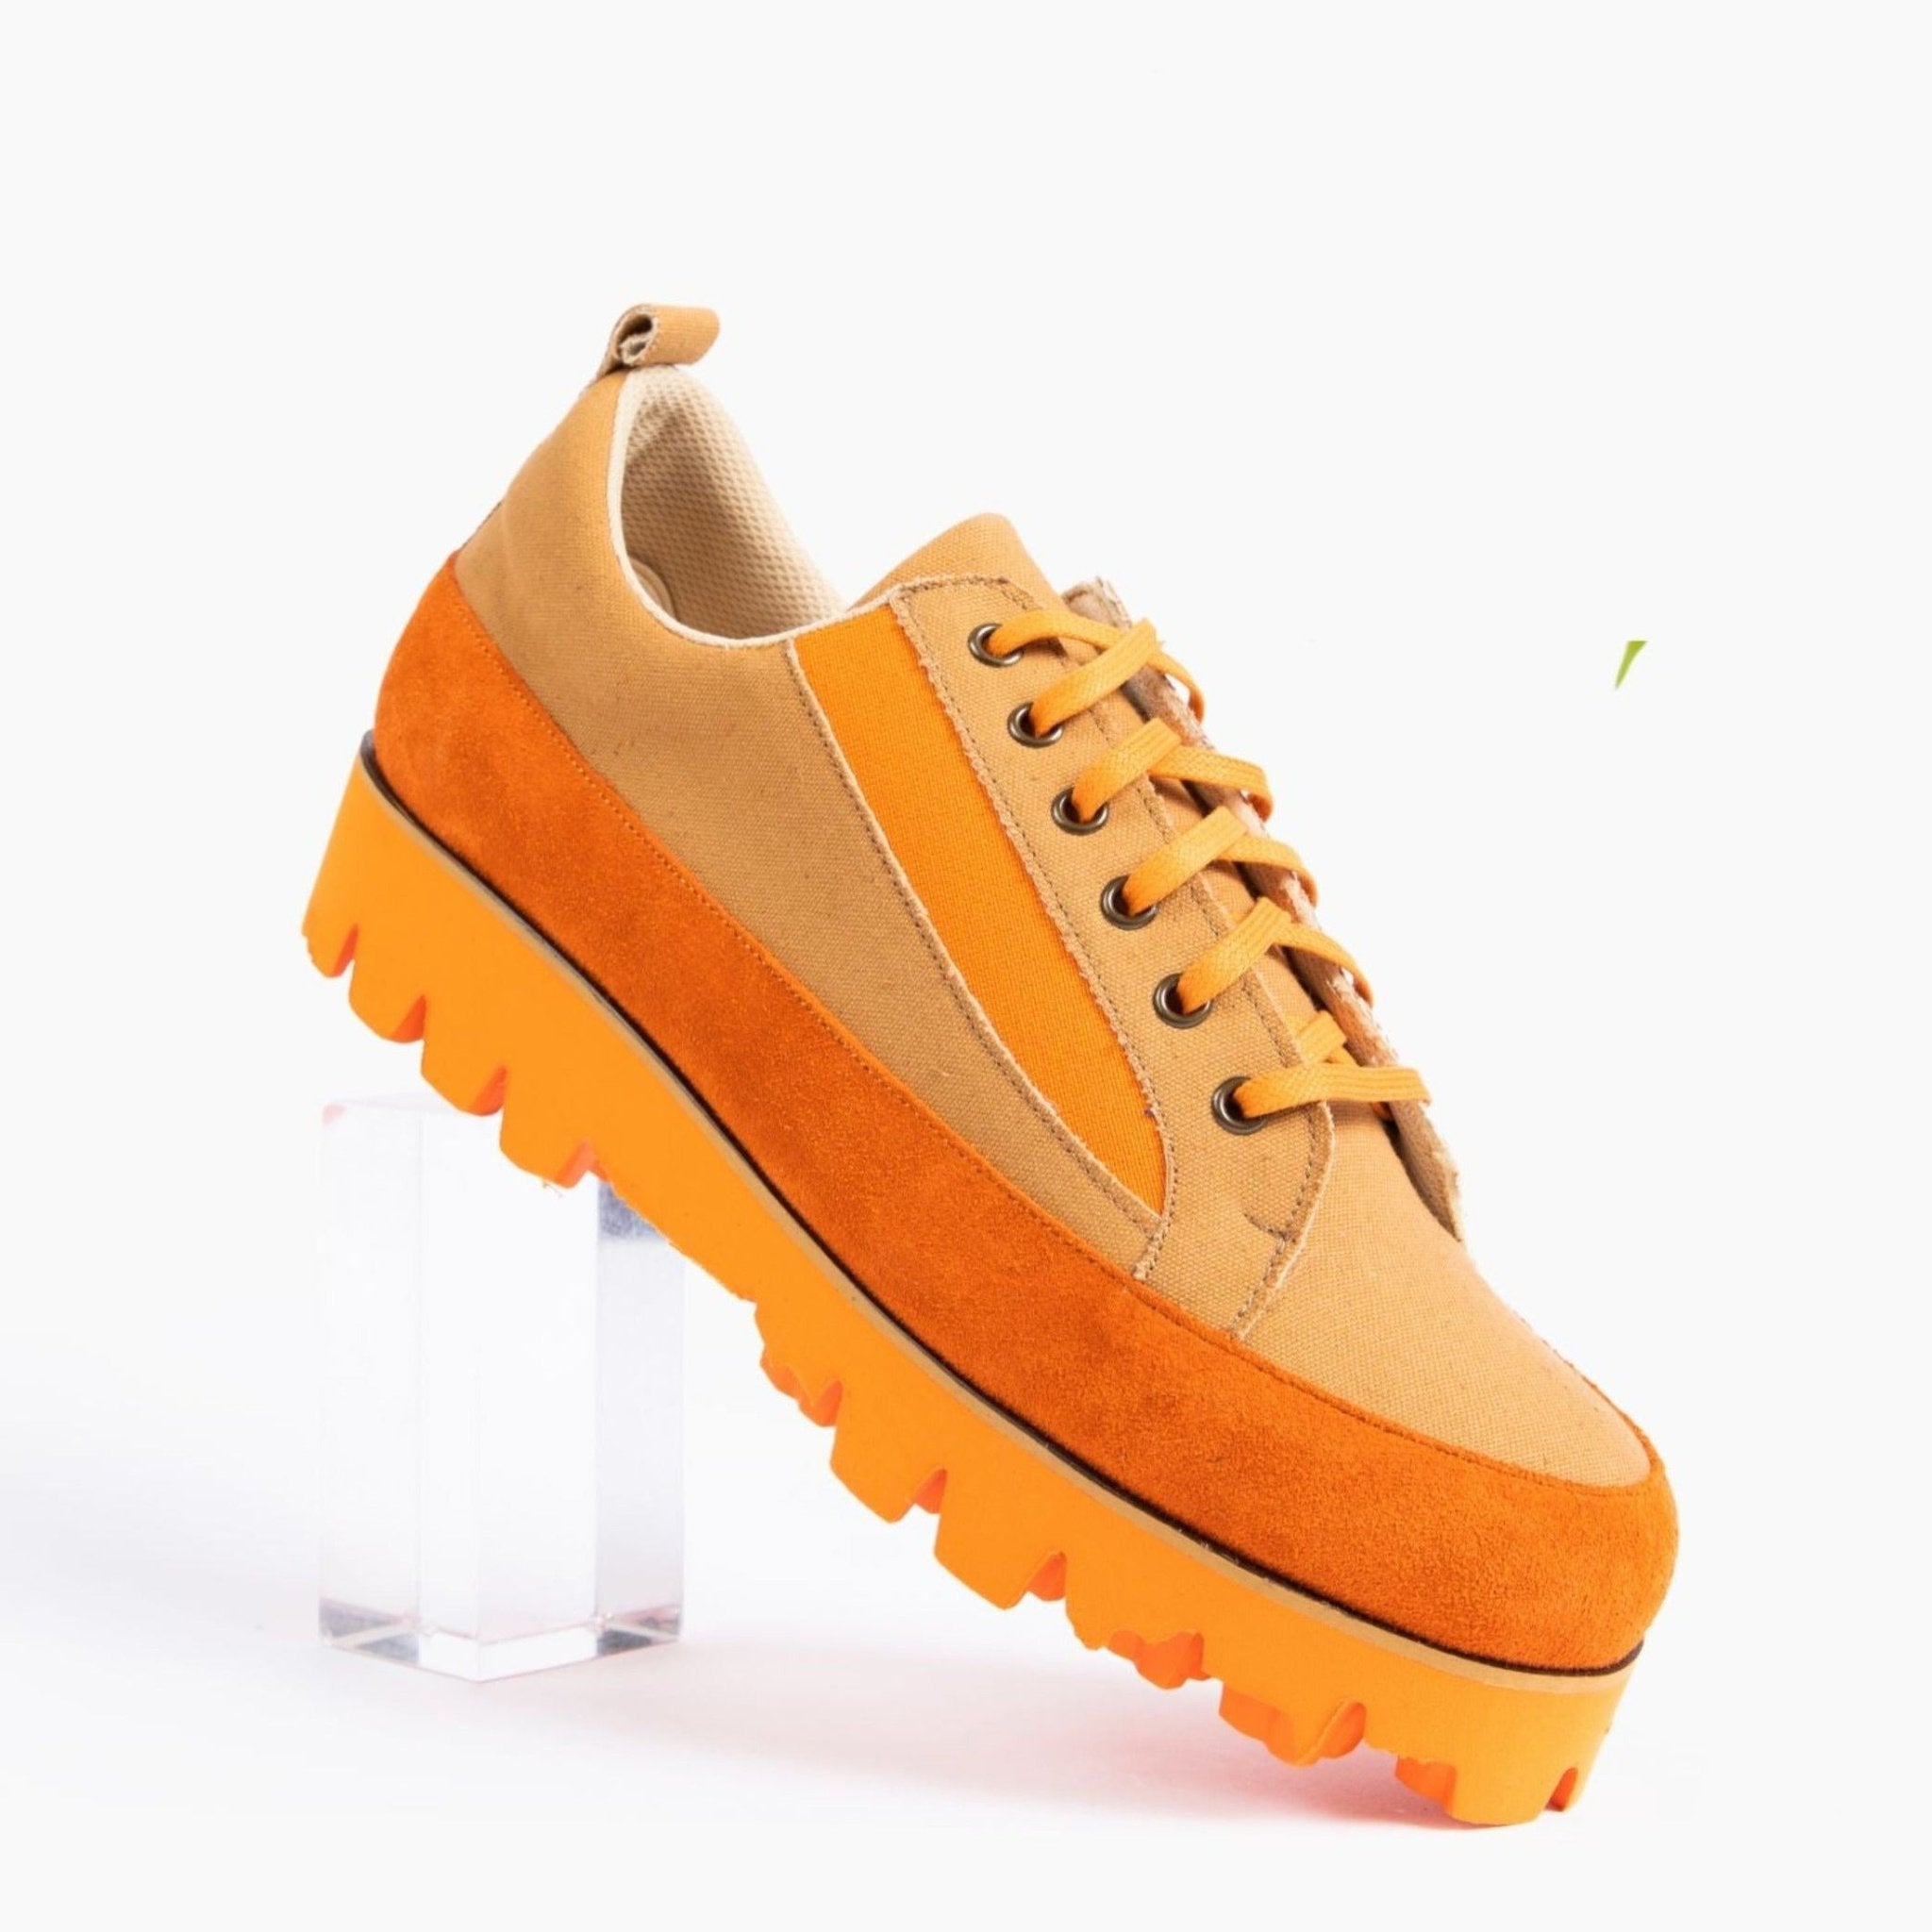  orange canvas suede sneaker large sizes